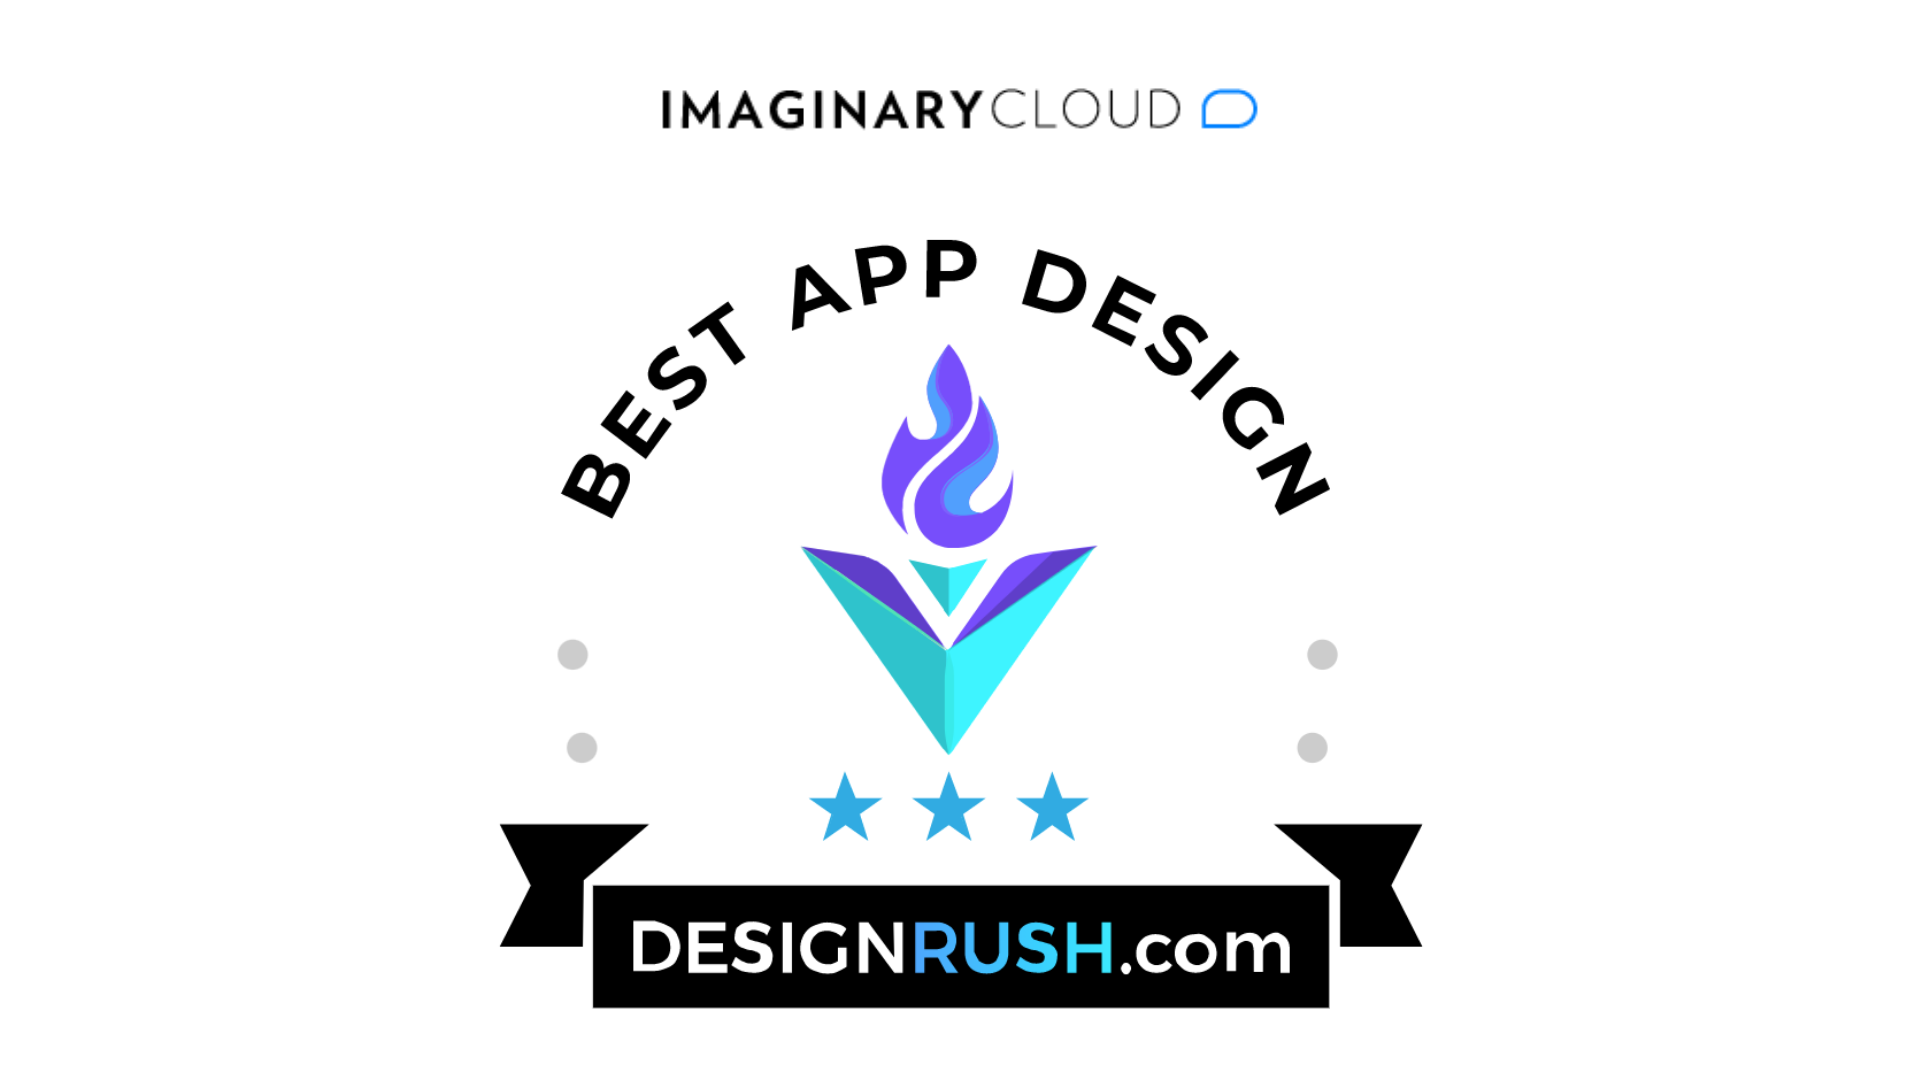 Imaginary Cloud wins the Best App Design Award by Design Rush